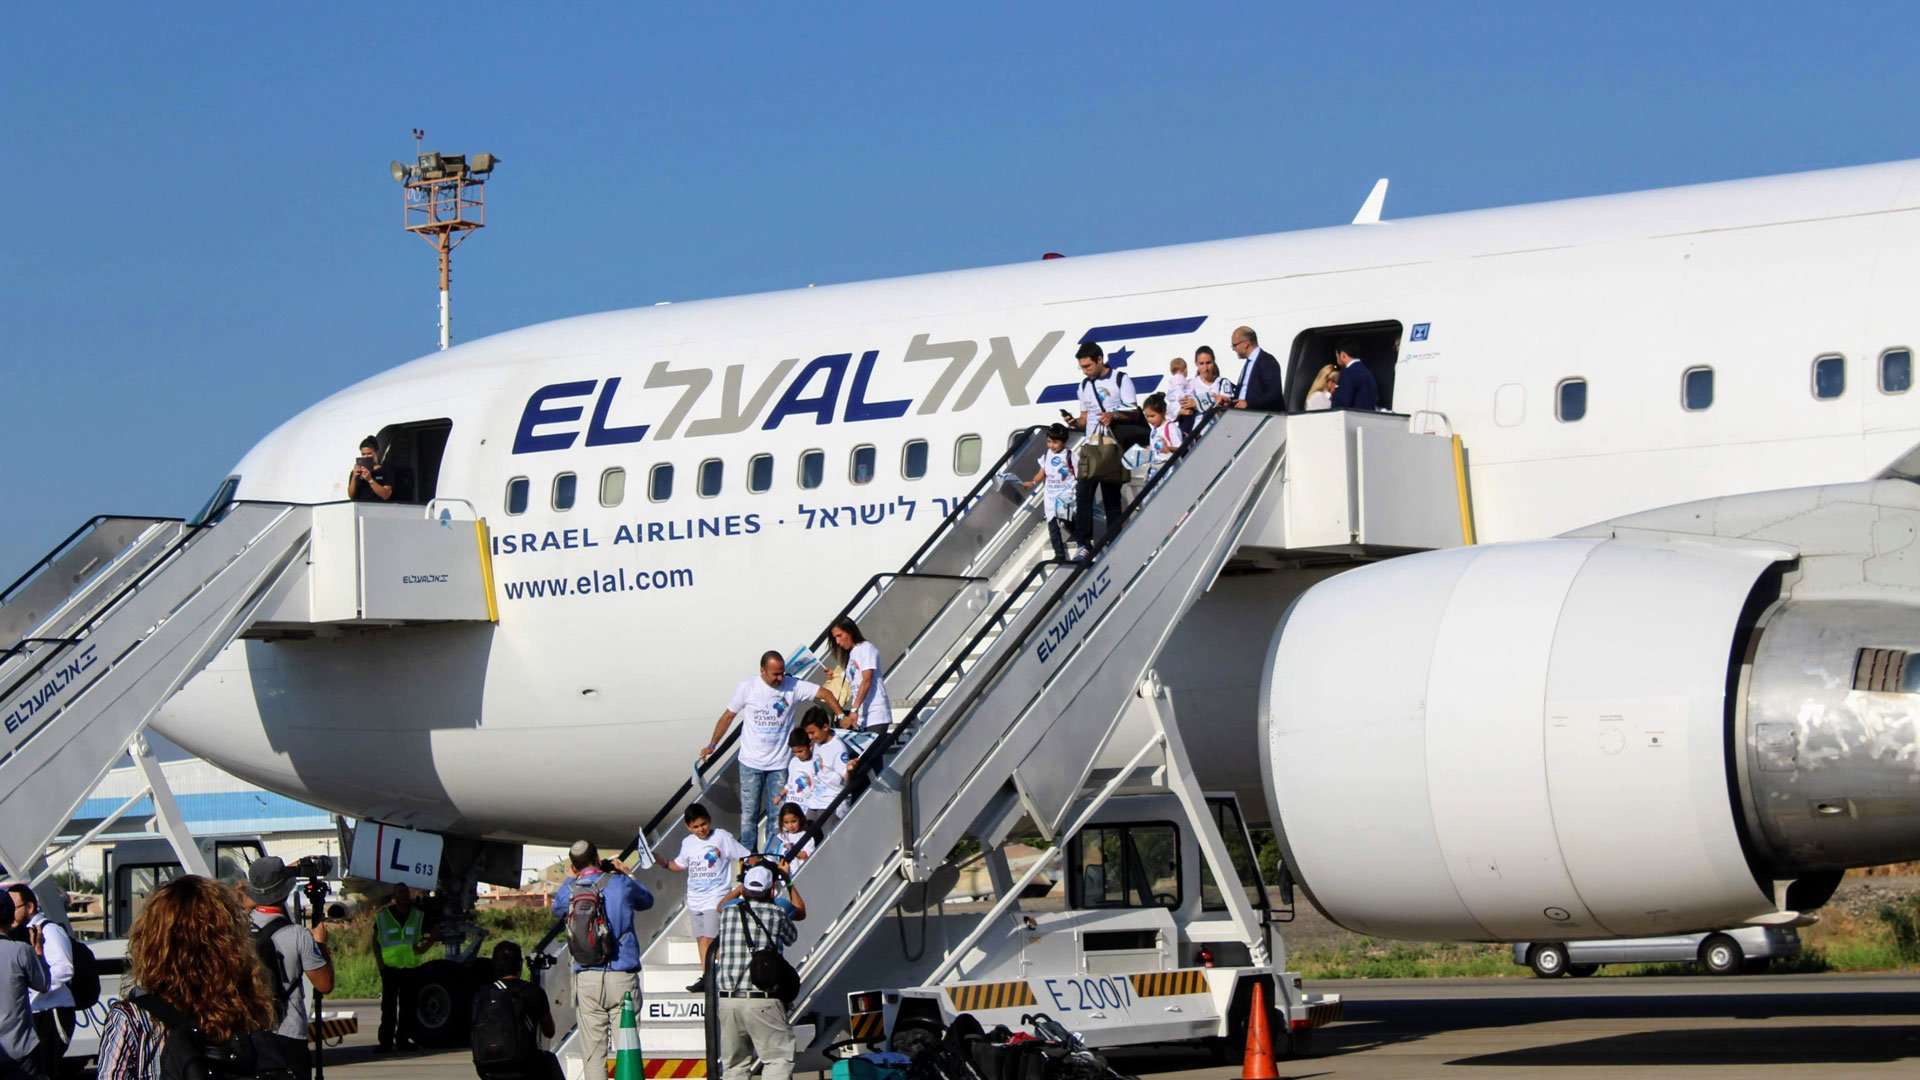 Aliyah - Jews Returning Home